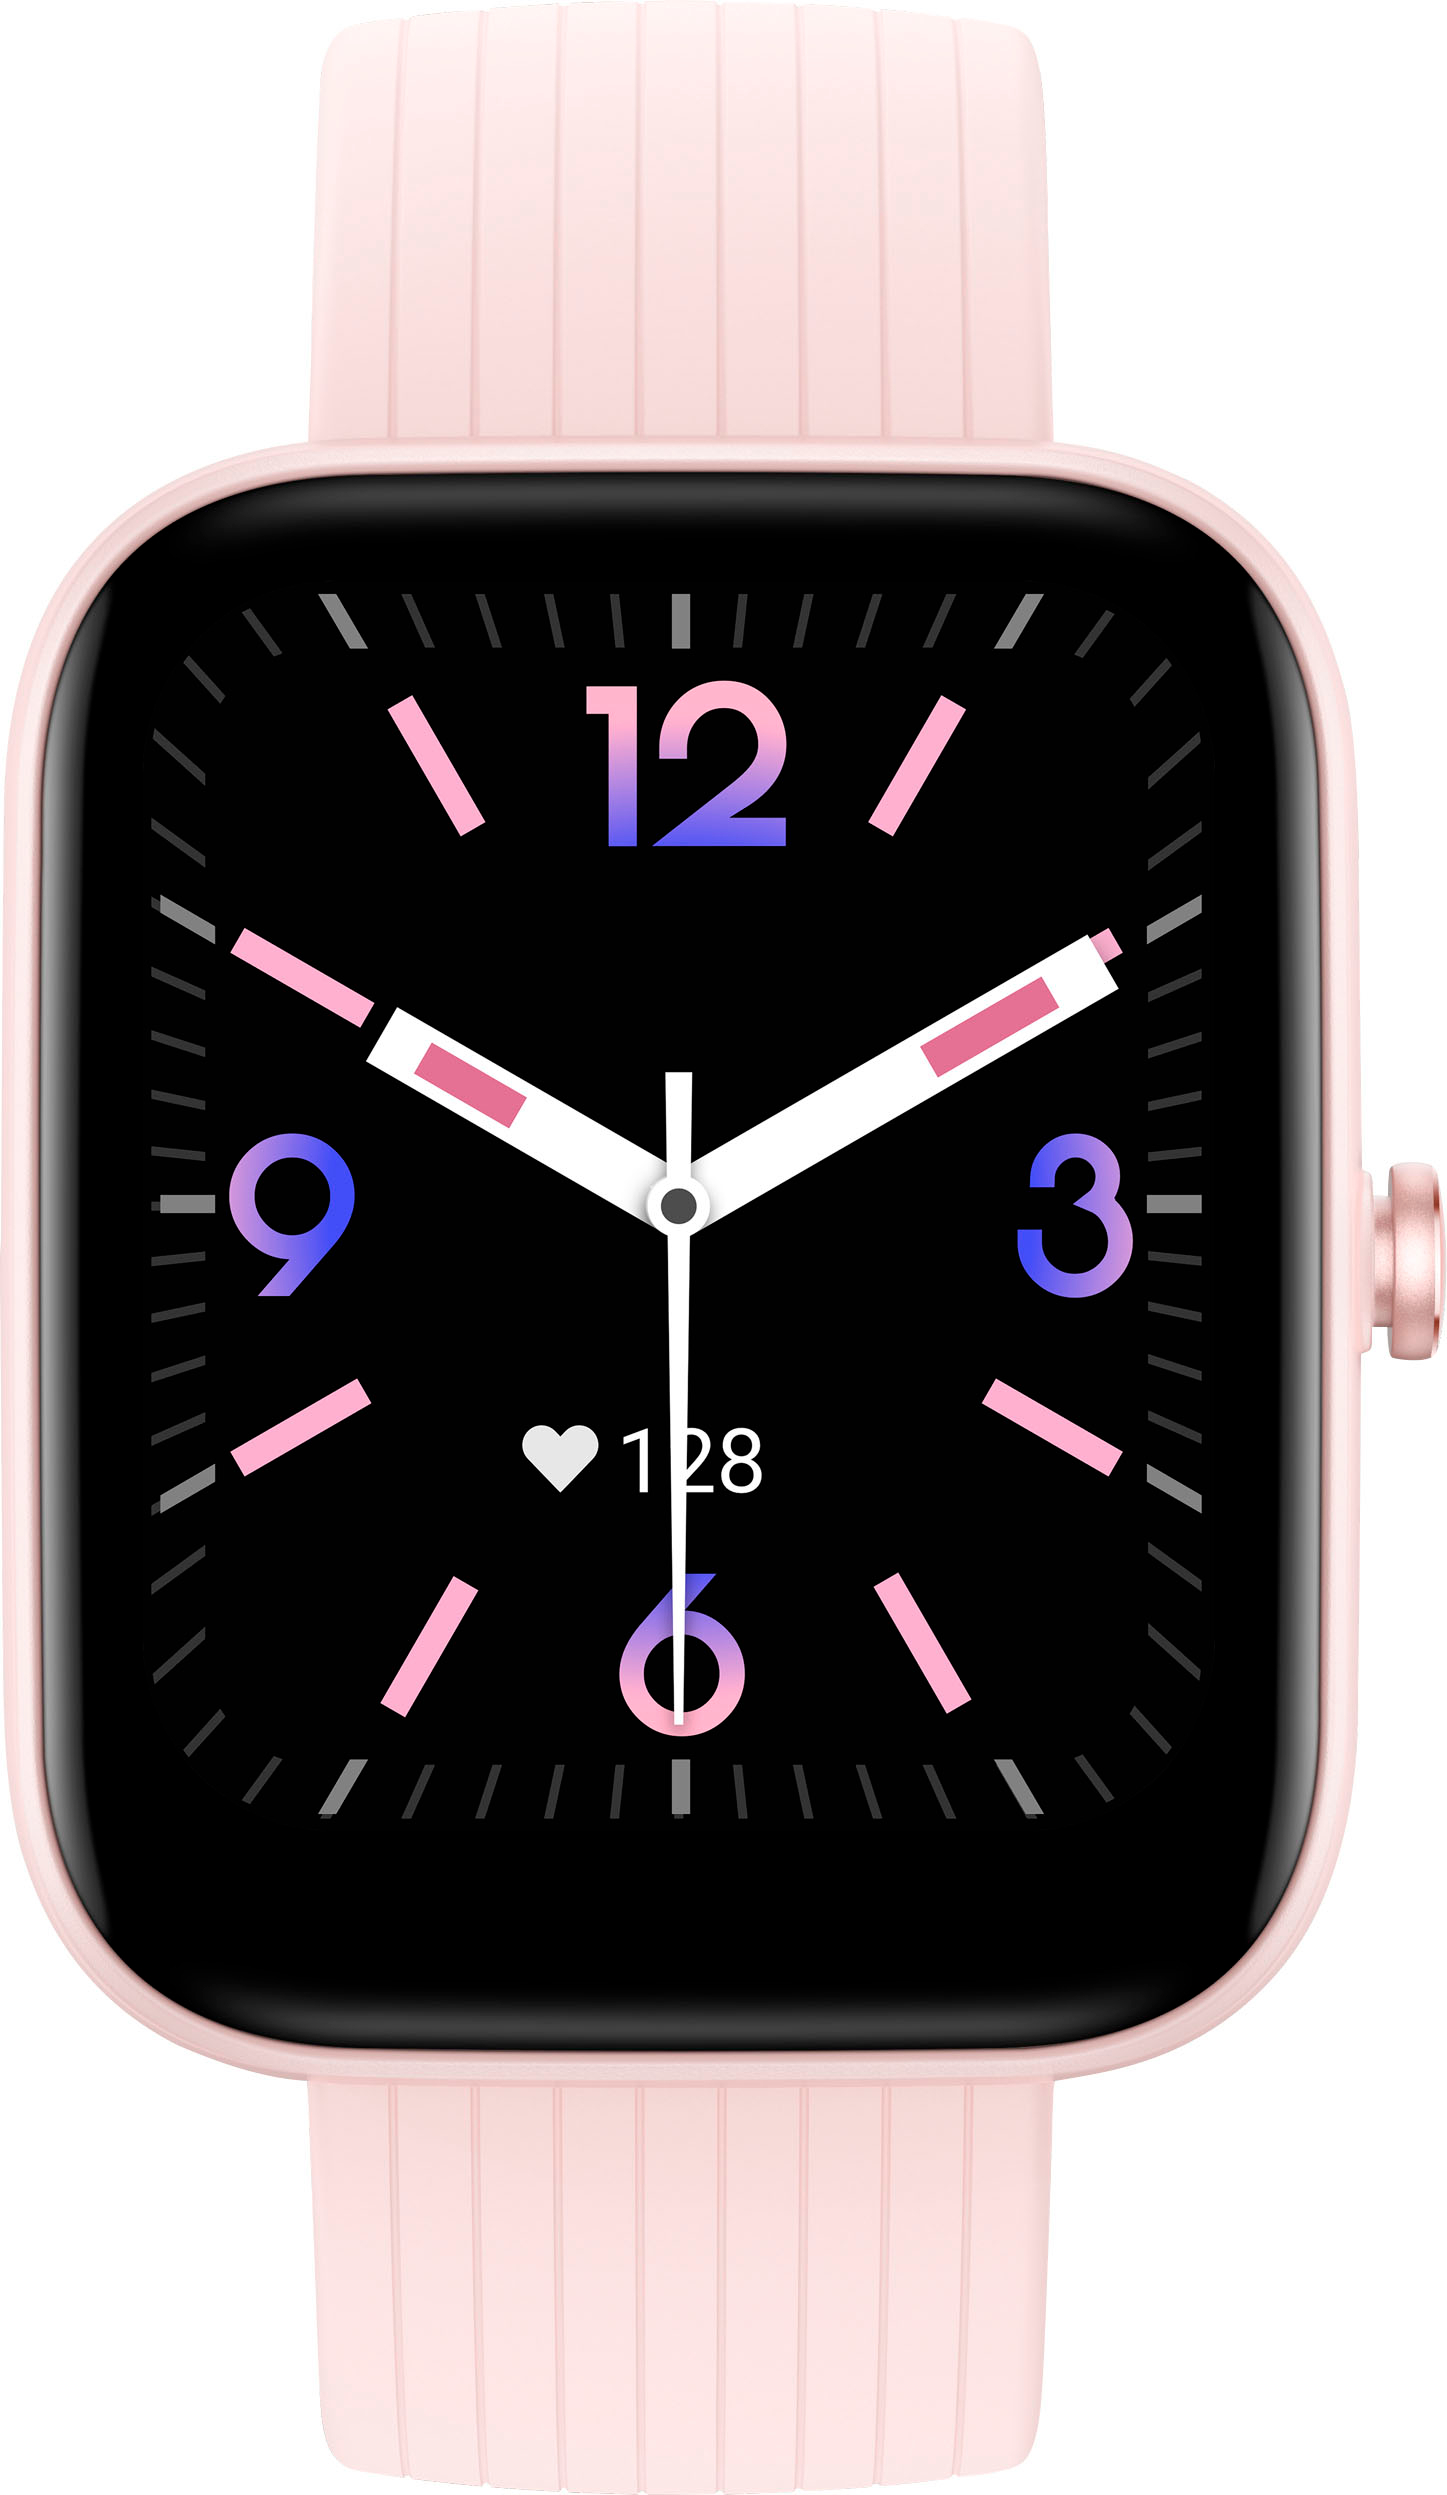 Smartwatch Xiaomi Amazfit Bip 3 - Comprar en mi store